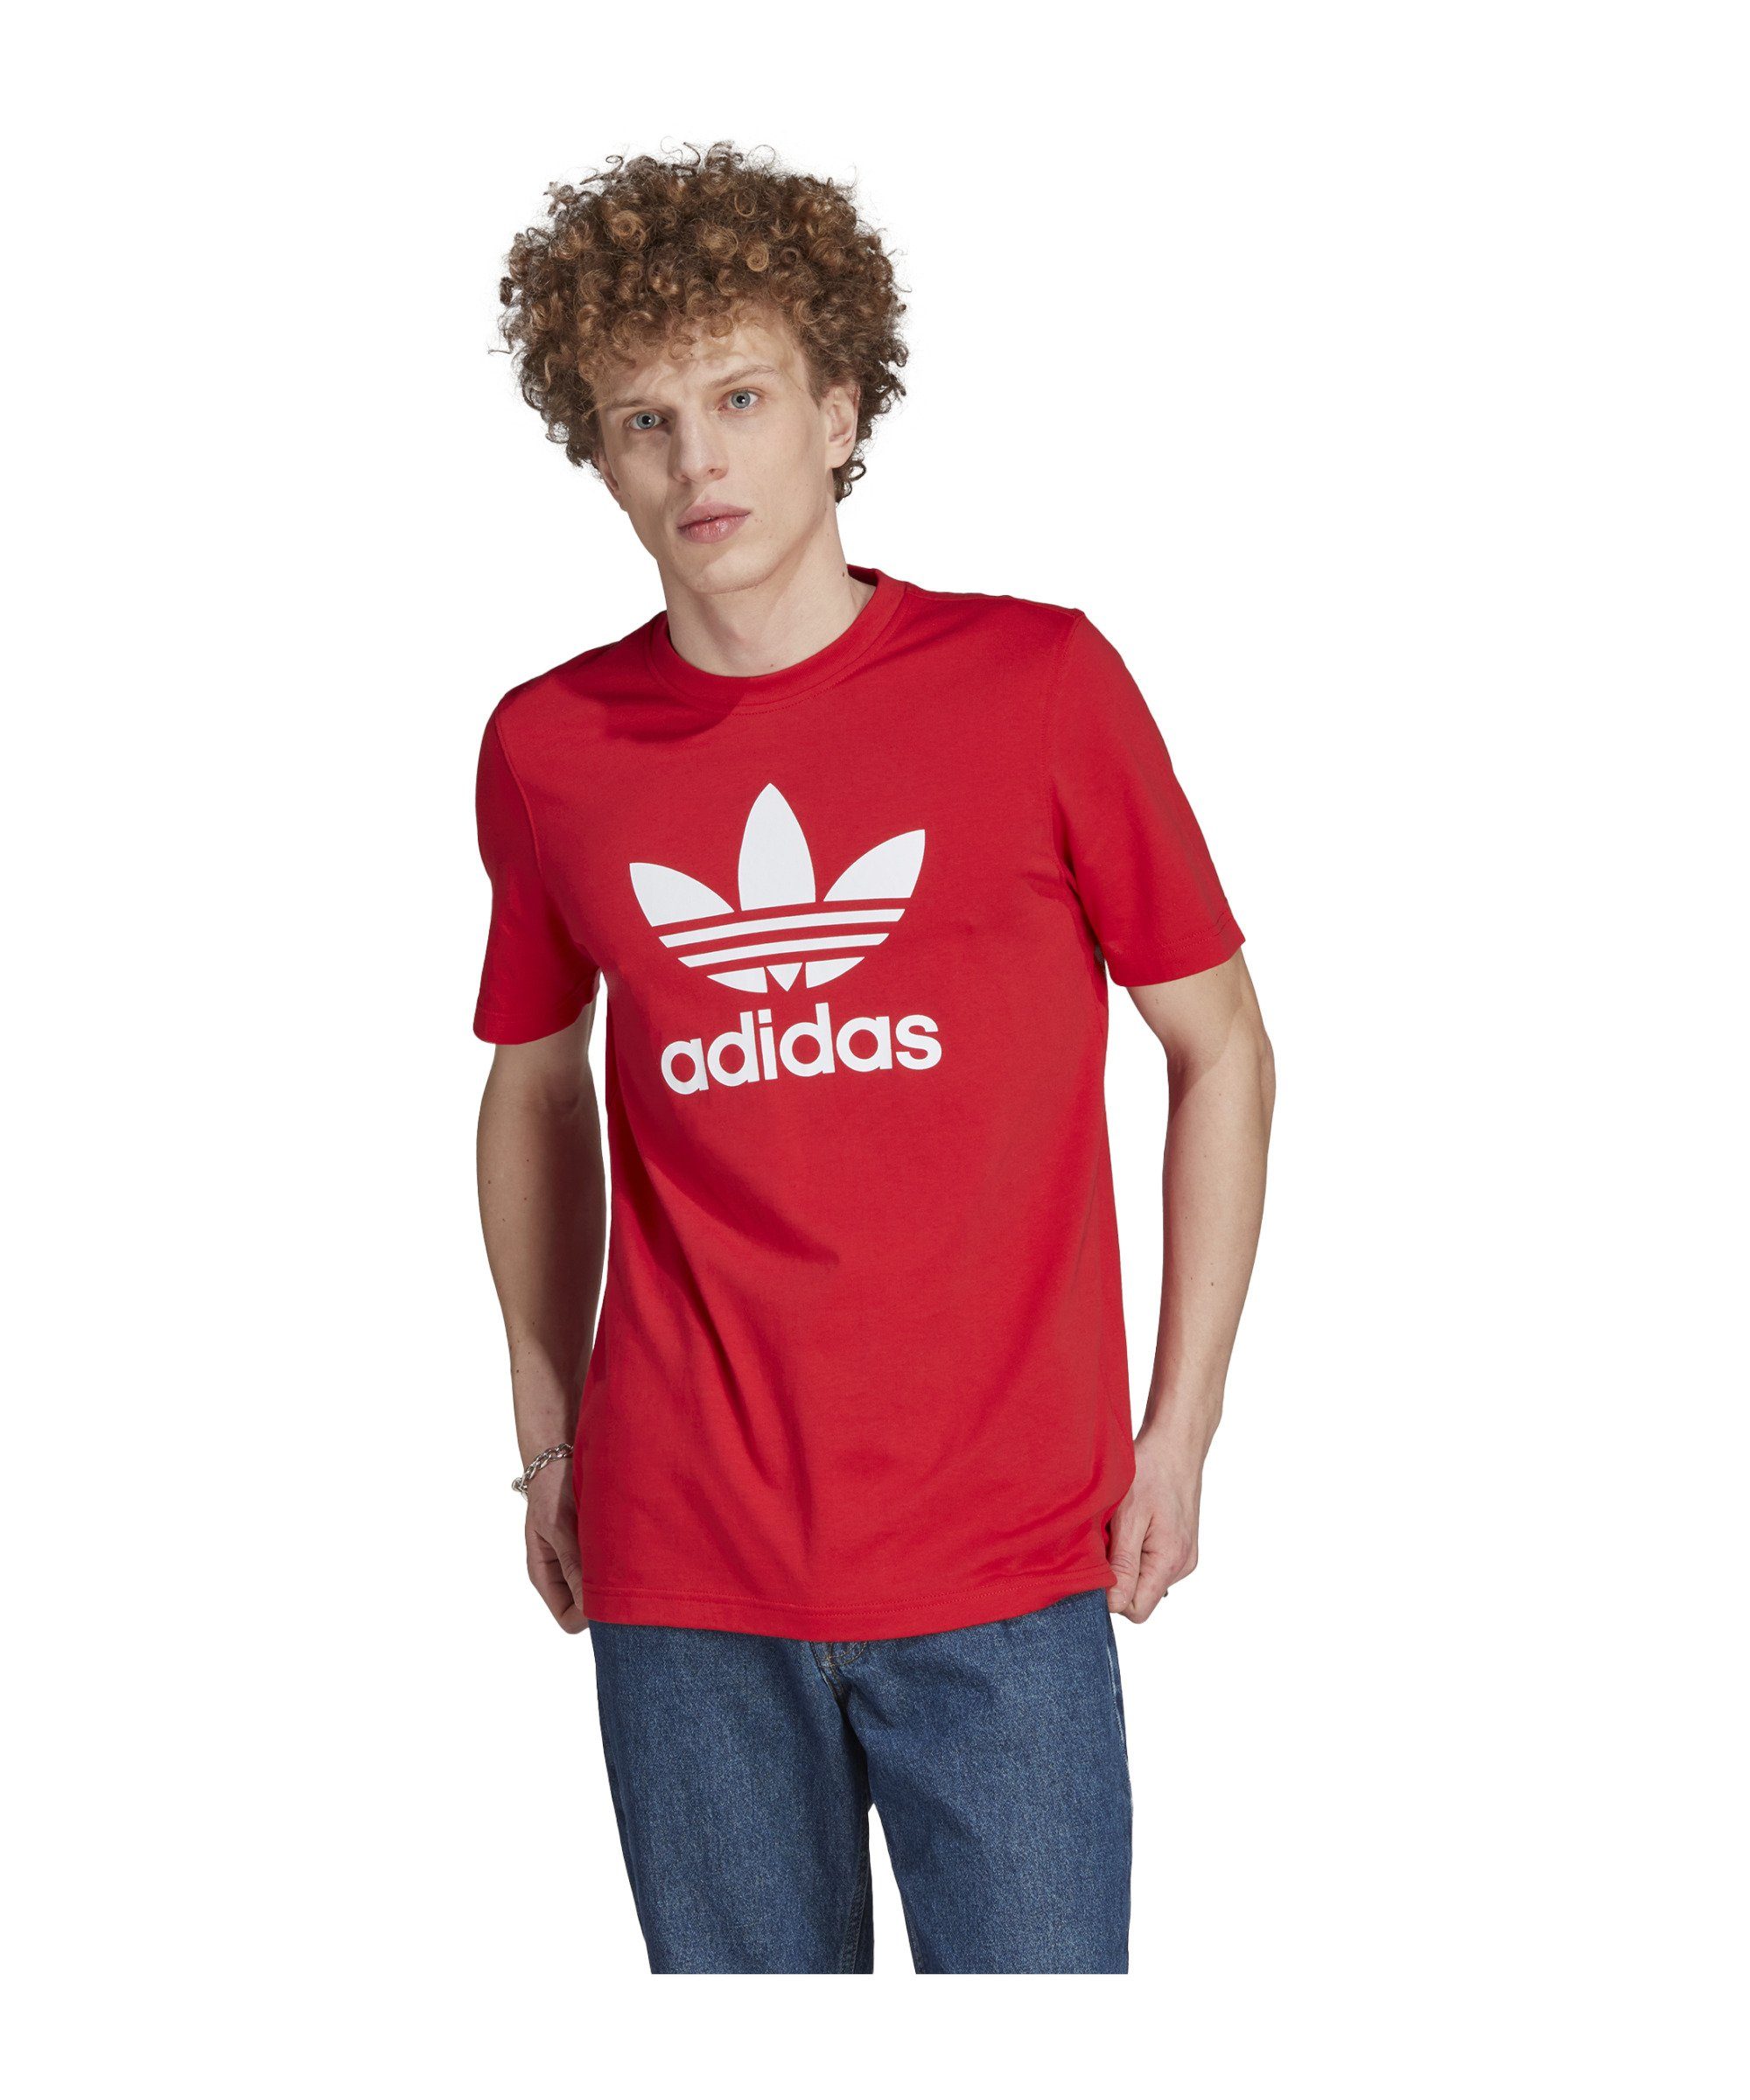 Originals Trefoil adidas T-Shirt default T-Shirt